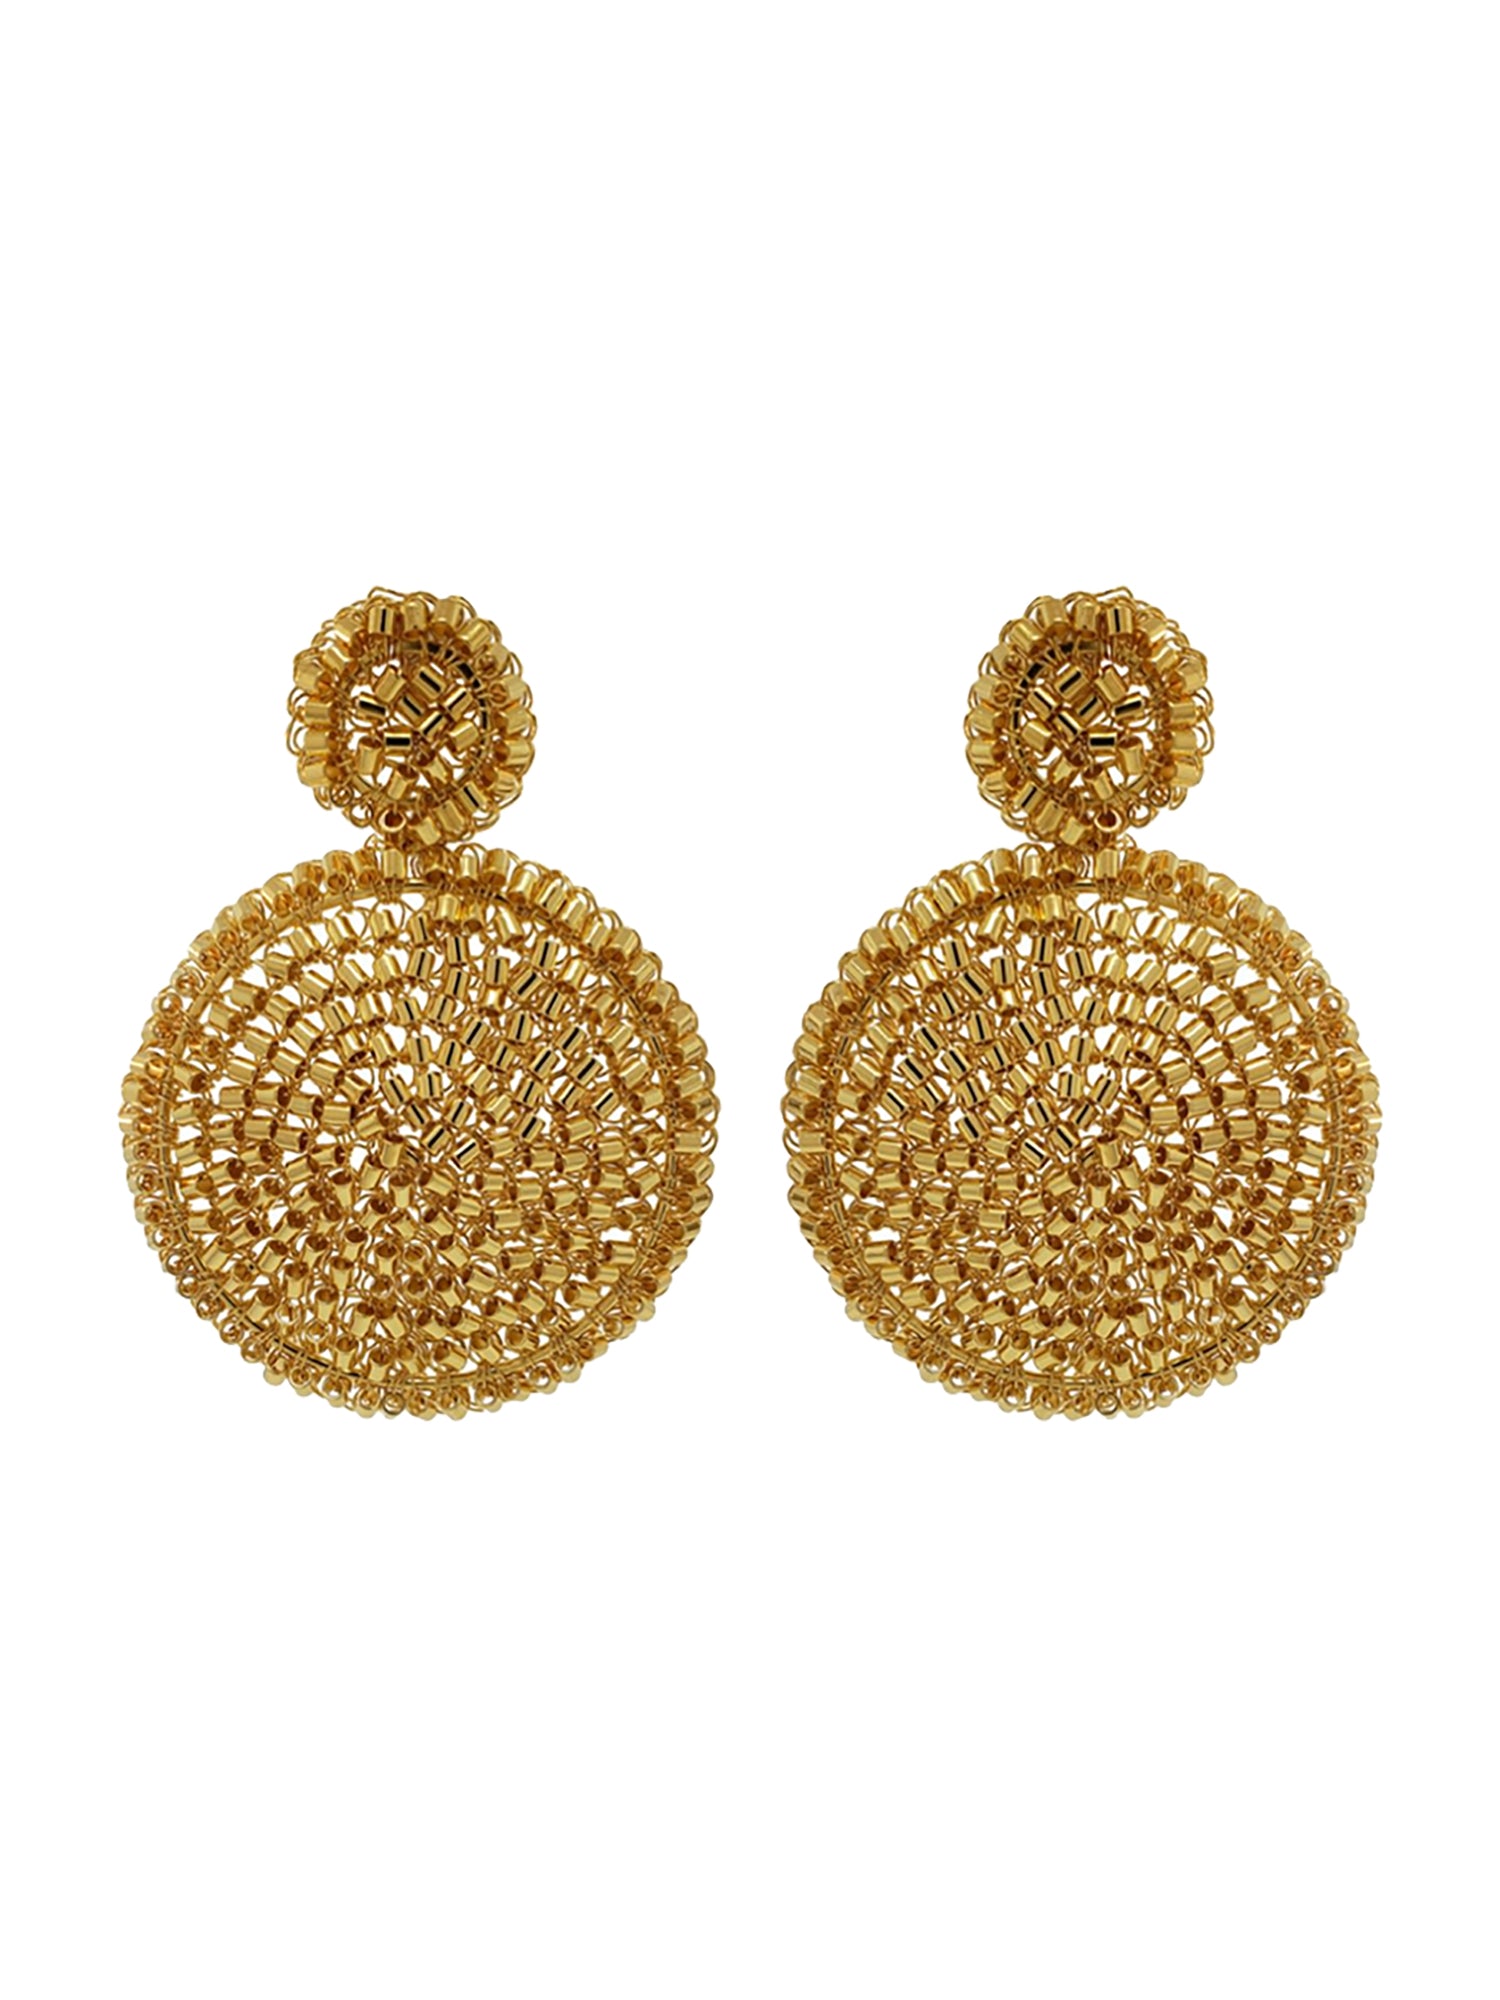 Dahlia Earrings - All Gold